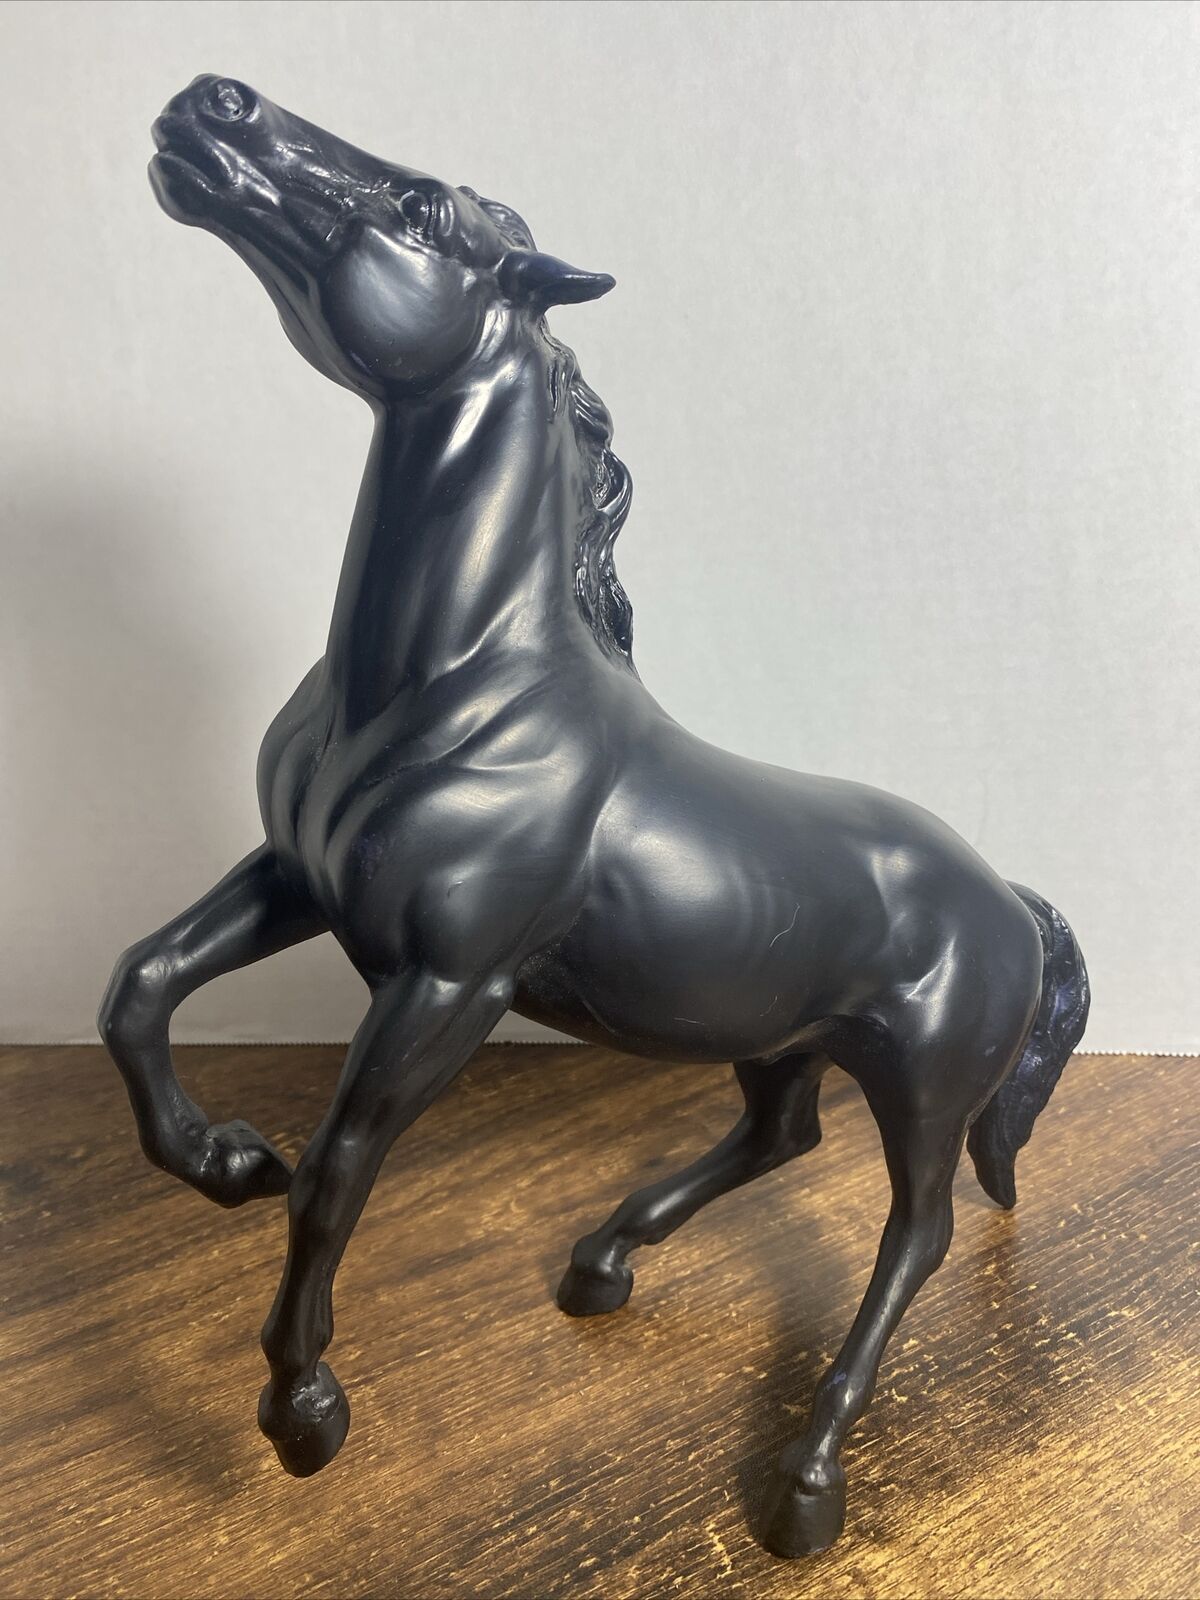 breyer horse traditional Model 1162 Alexander The Great’s War Horse “Bucephalus”